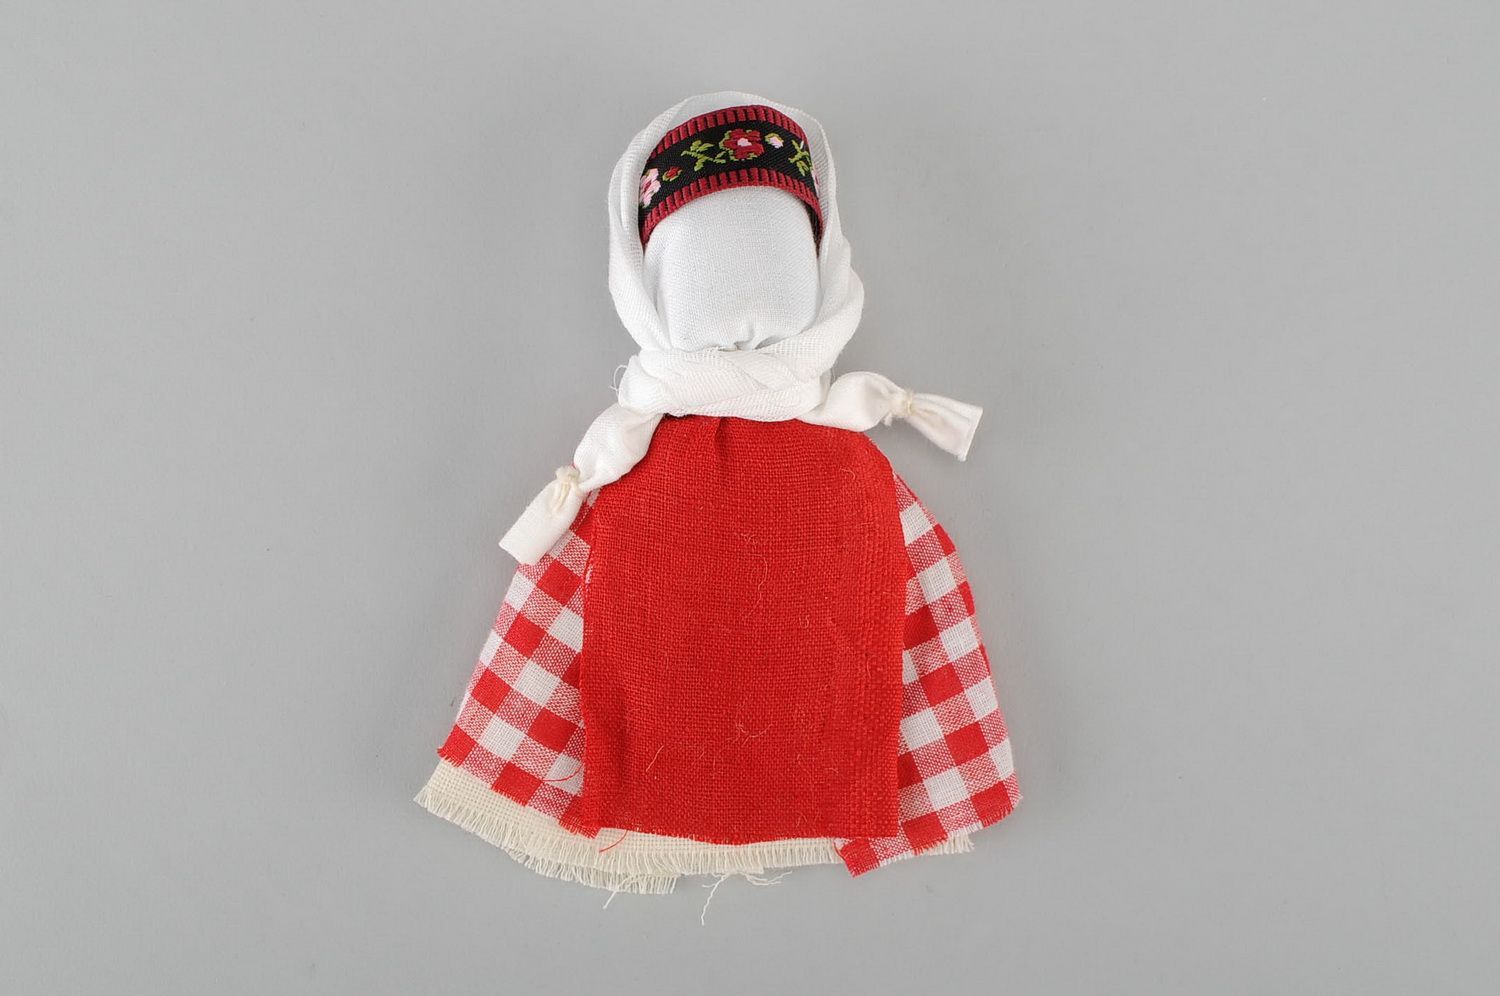 Motanka doll made of cotton photo 3